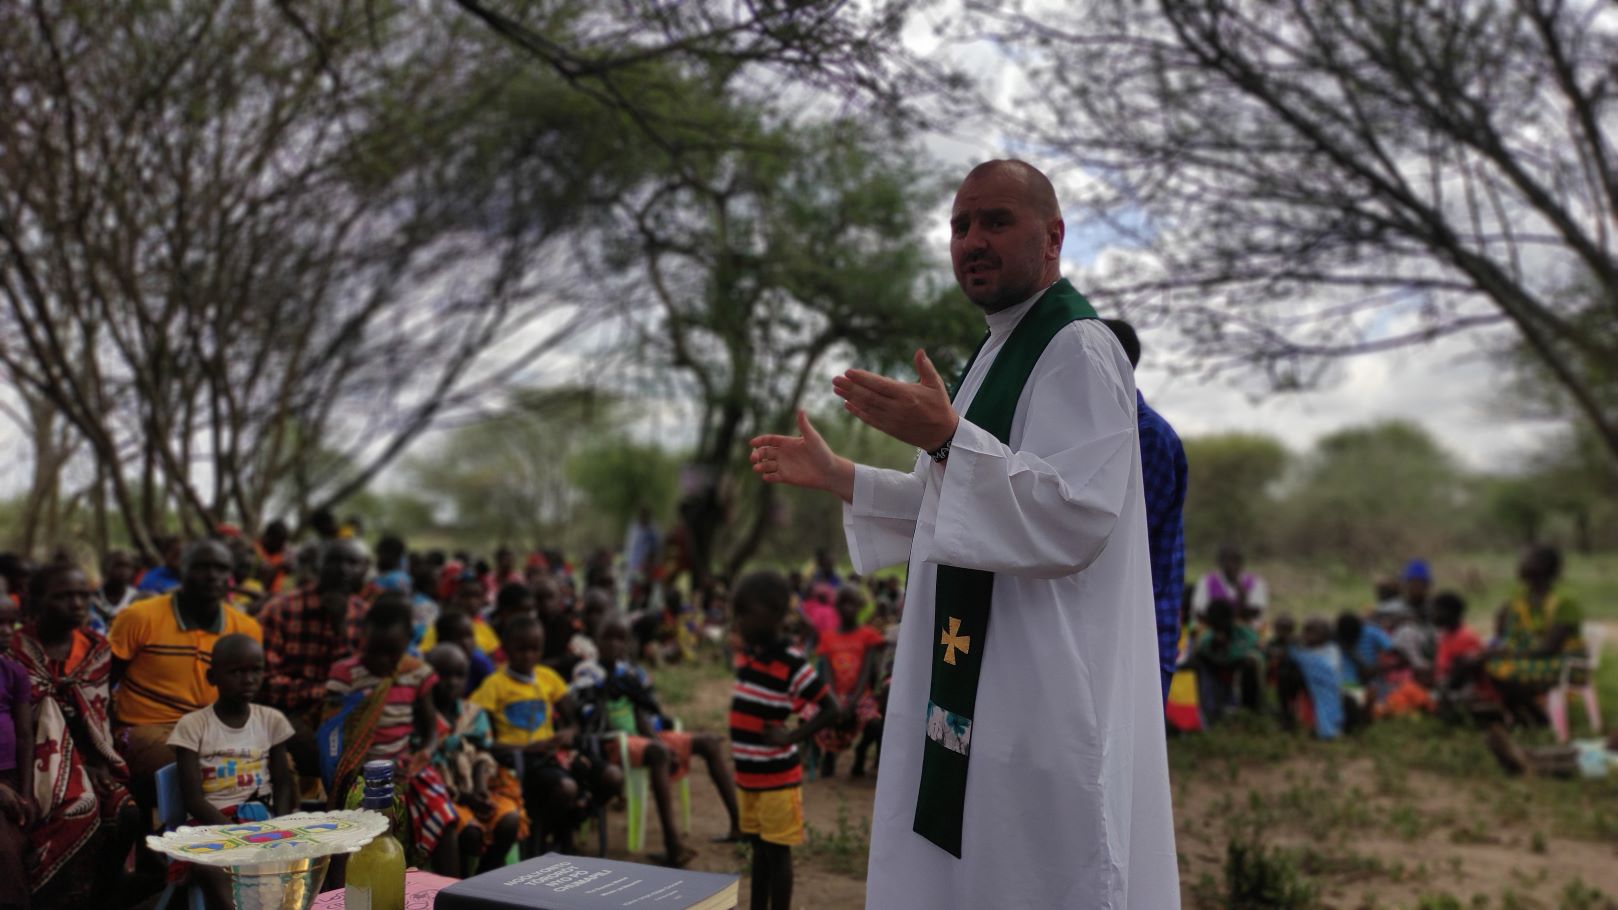 Fr Maciek celebrates Mass outside in a Kenyan Mission<br />
